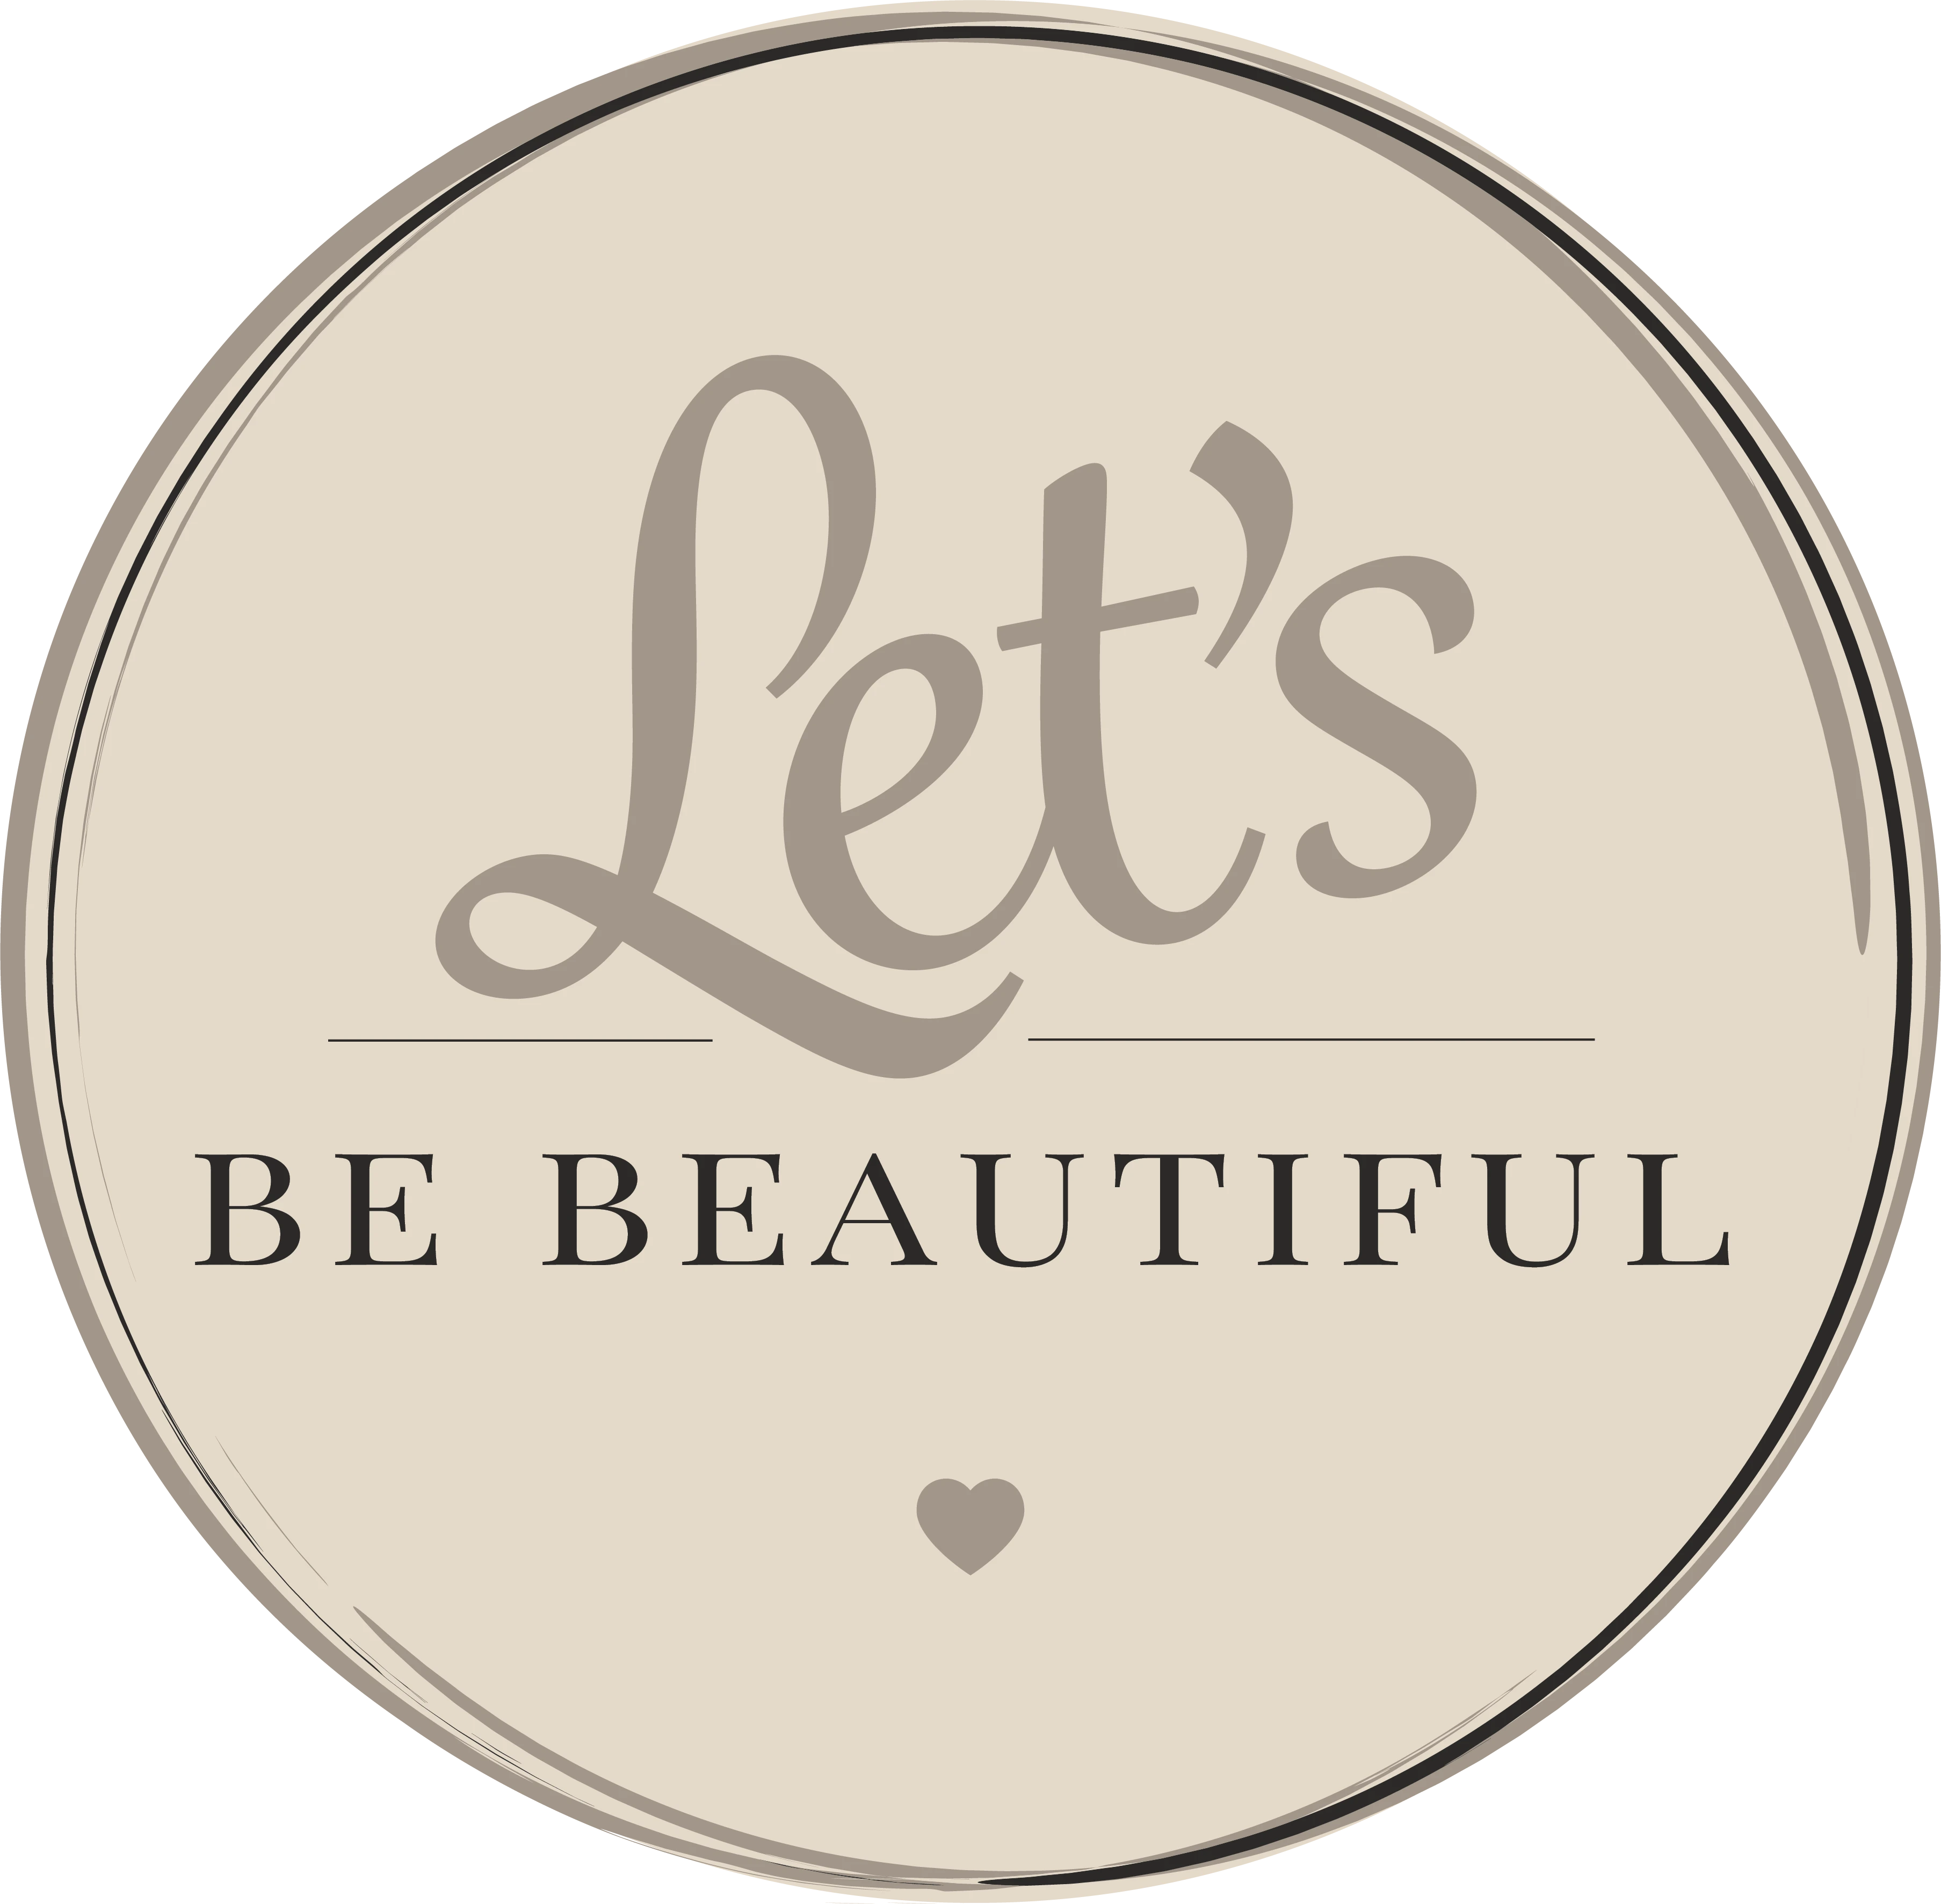 Let's be Beautiful logo